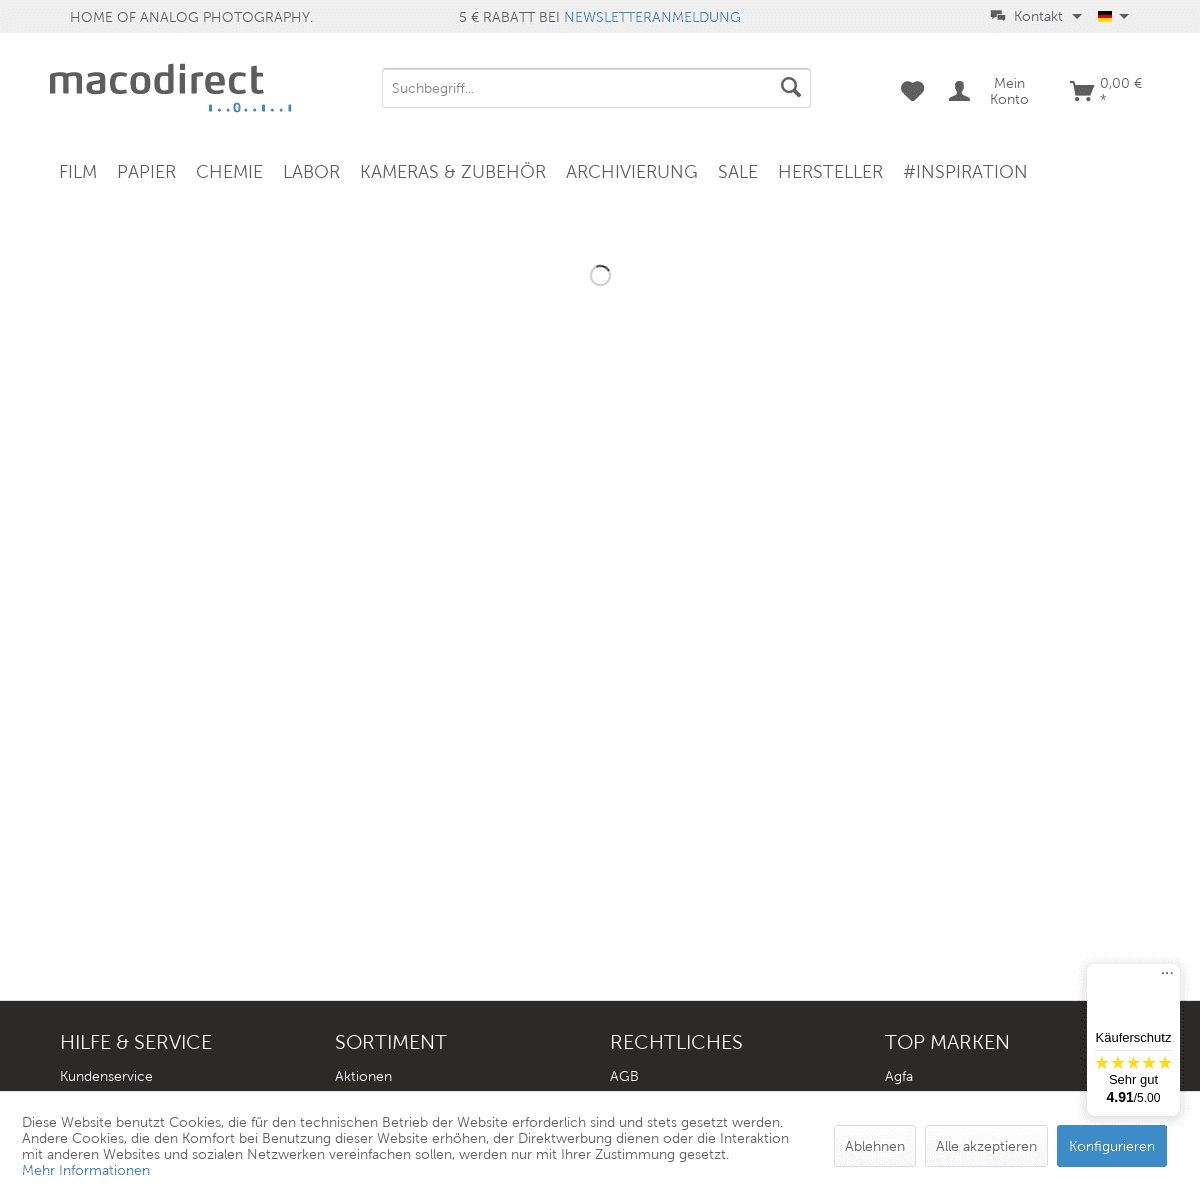 A complete backup of https://macodirect.de